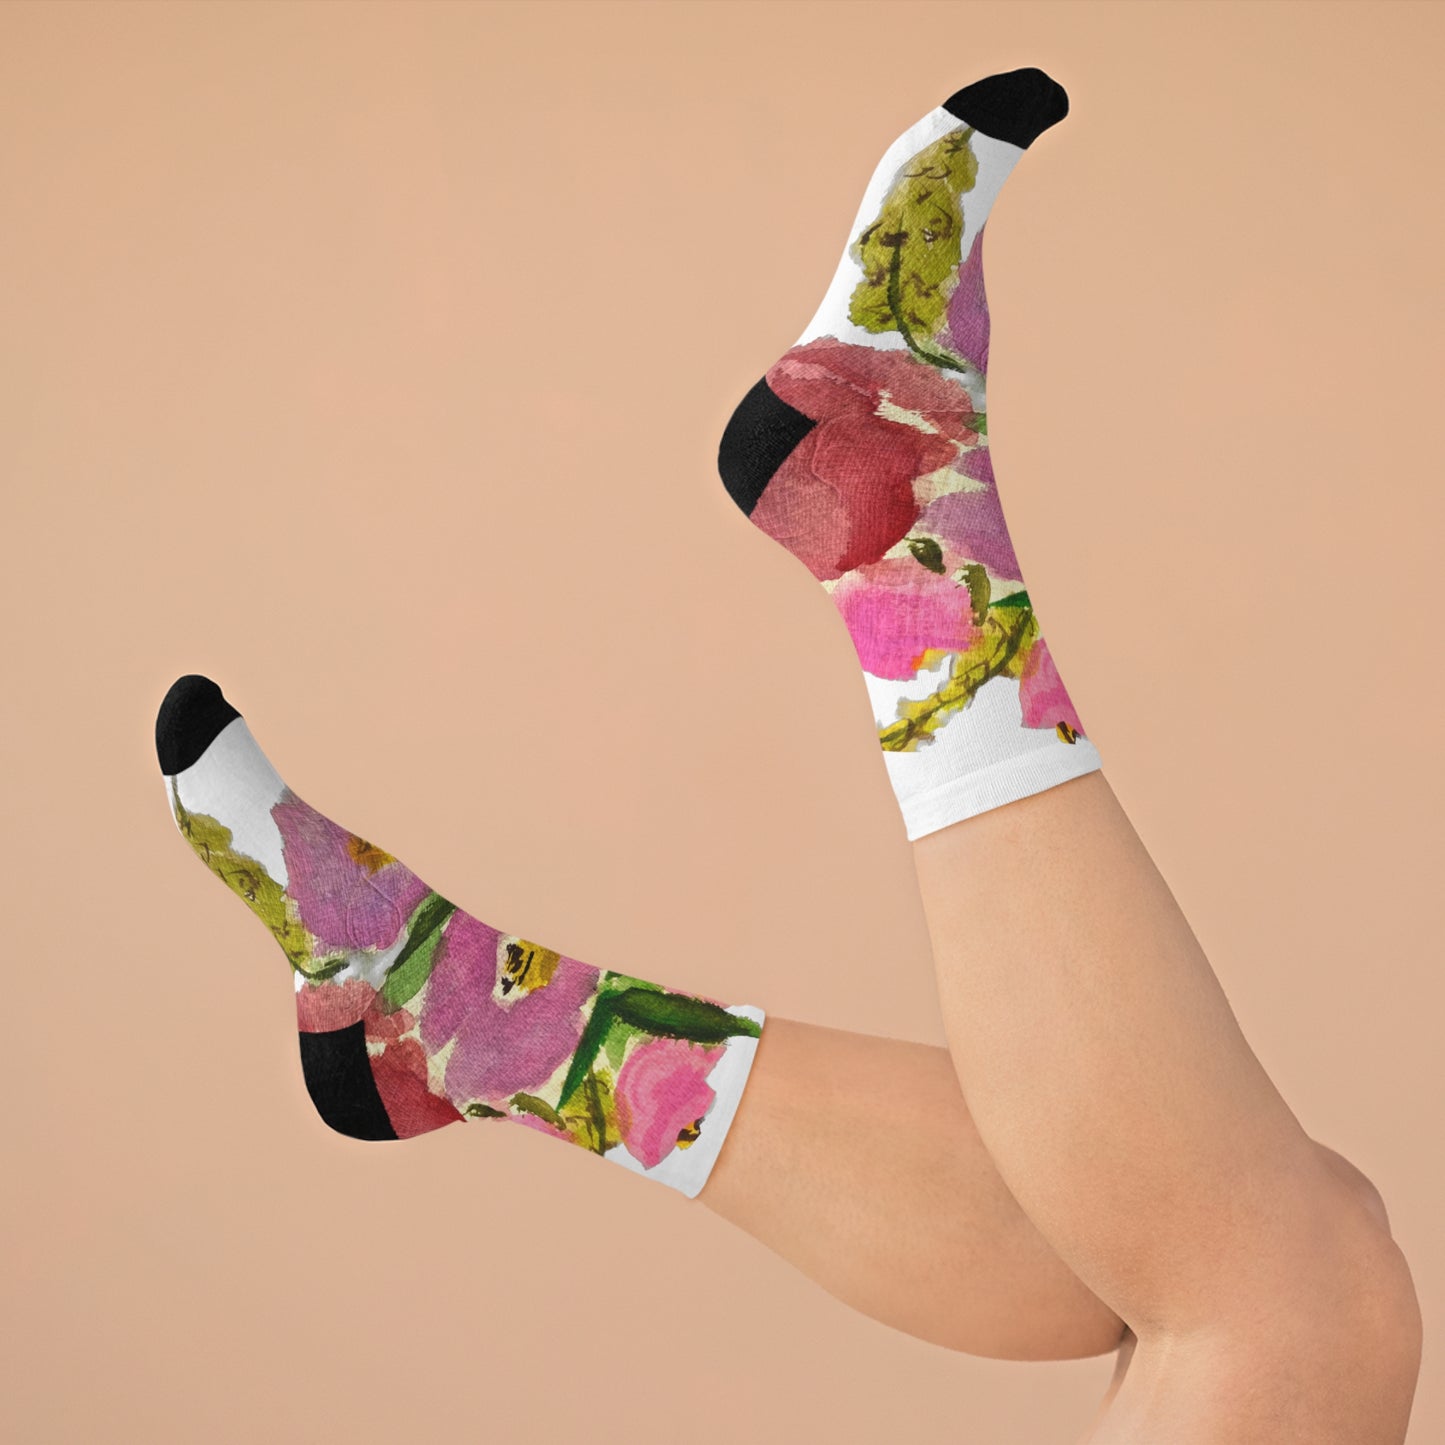 Anna Floral Socks